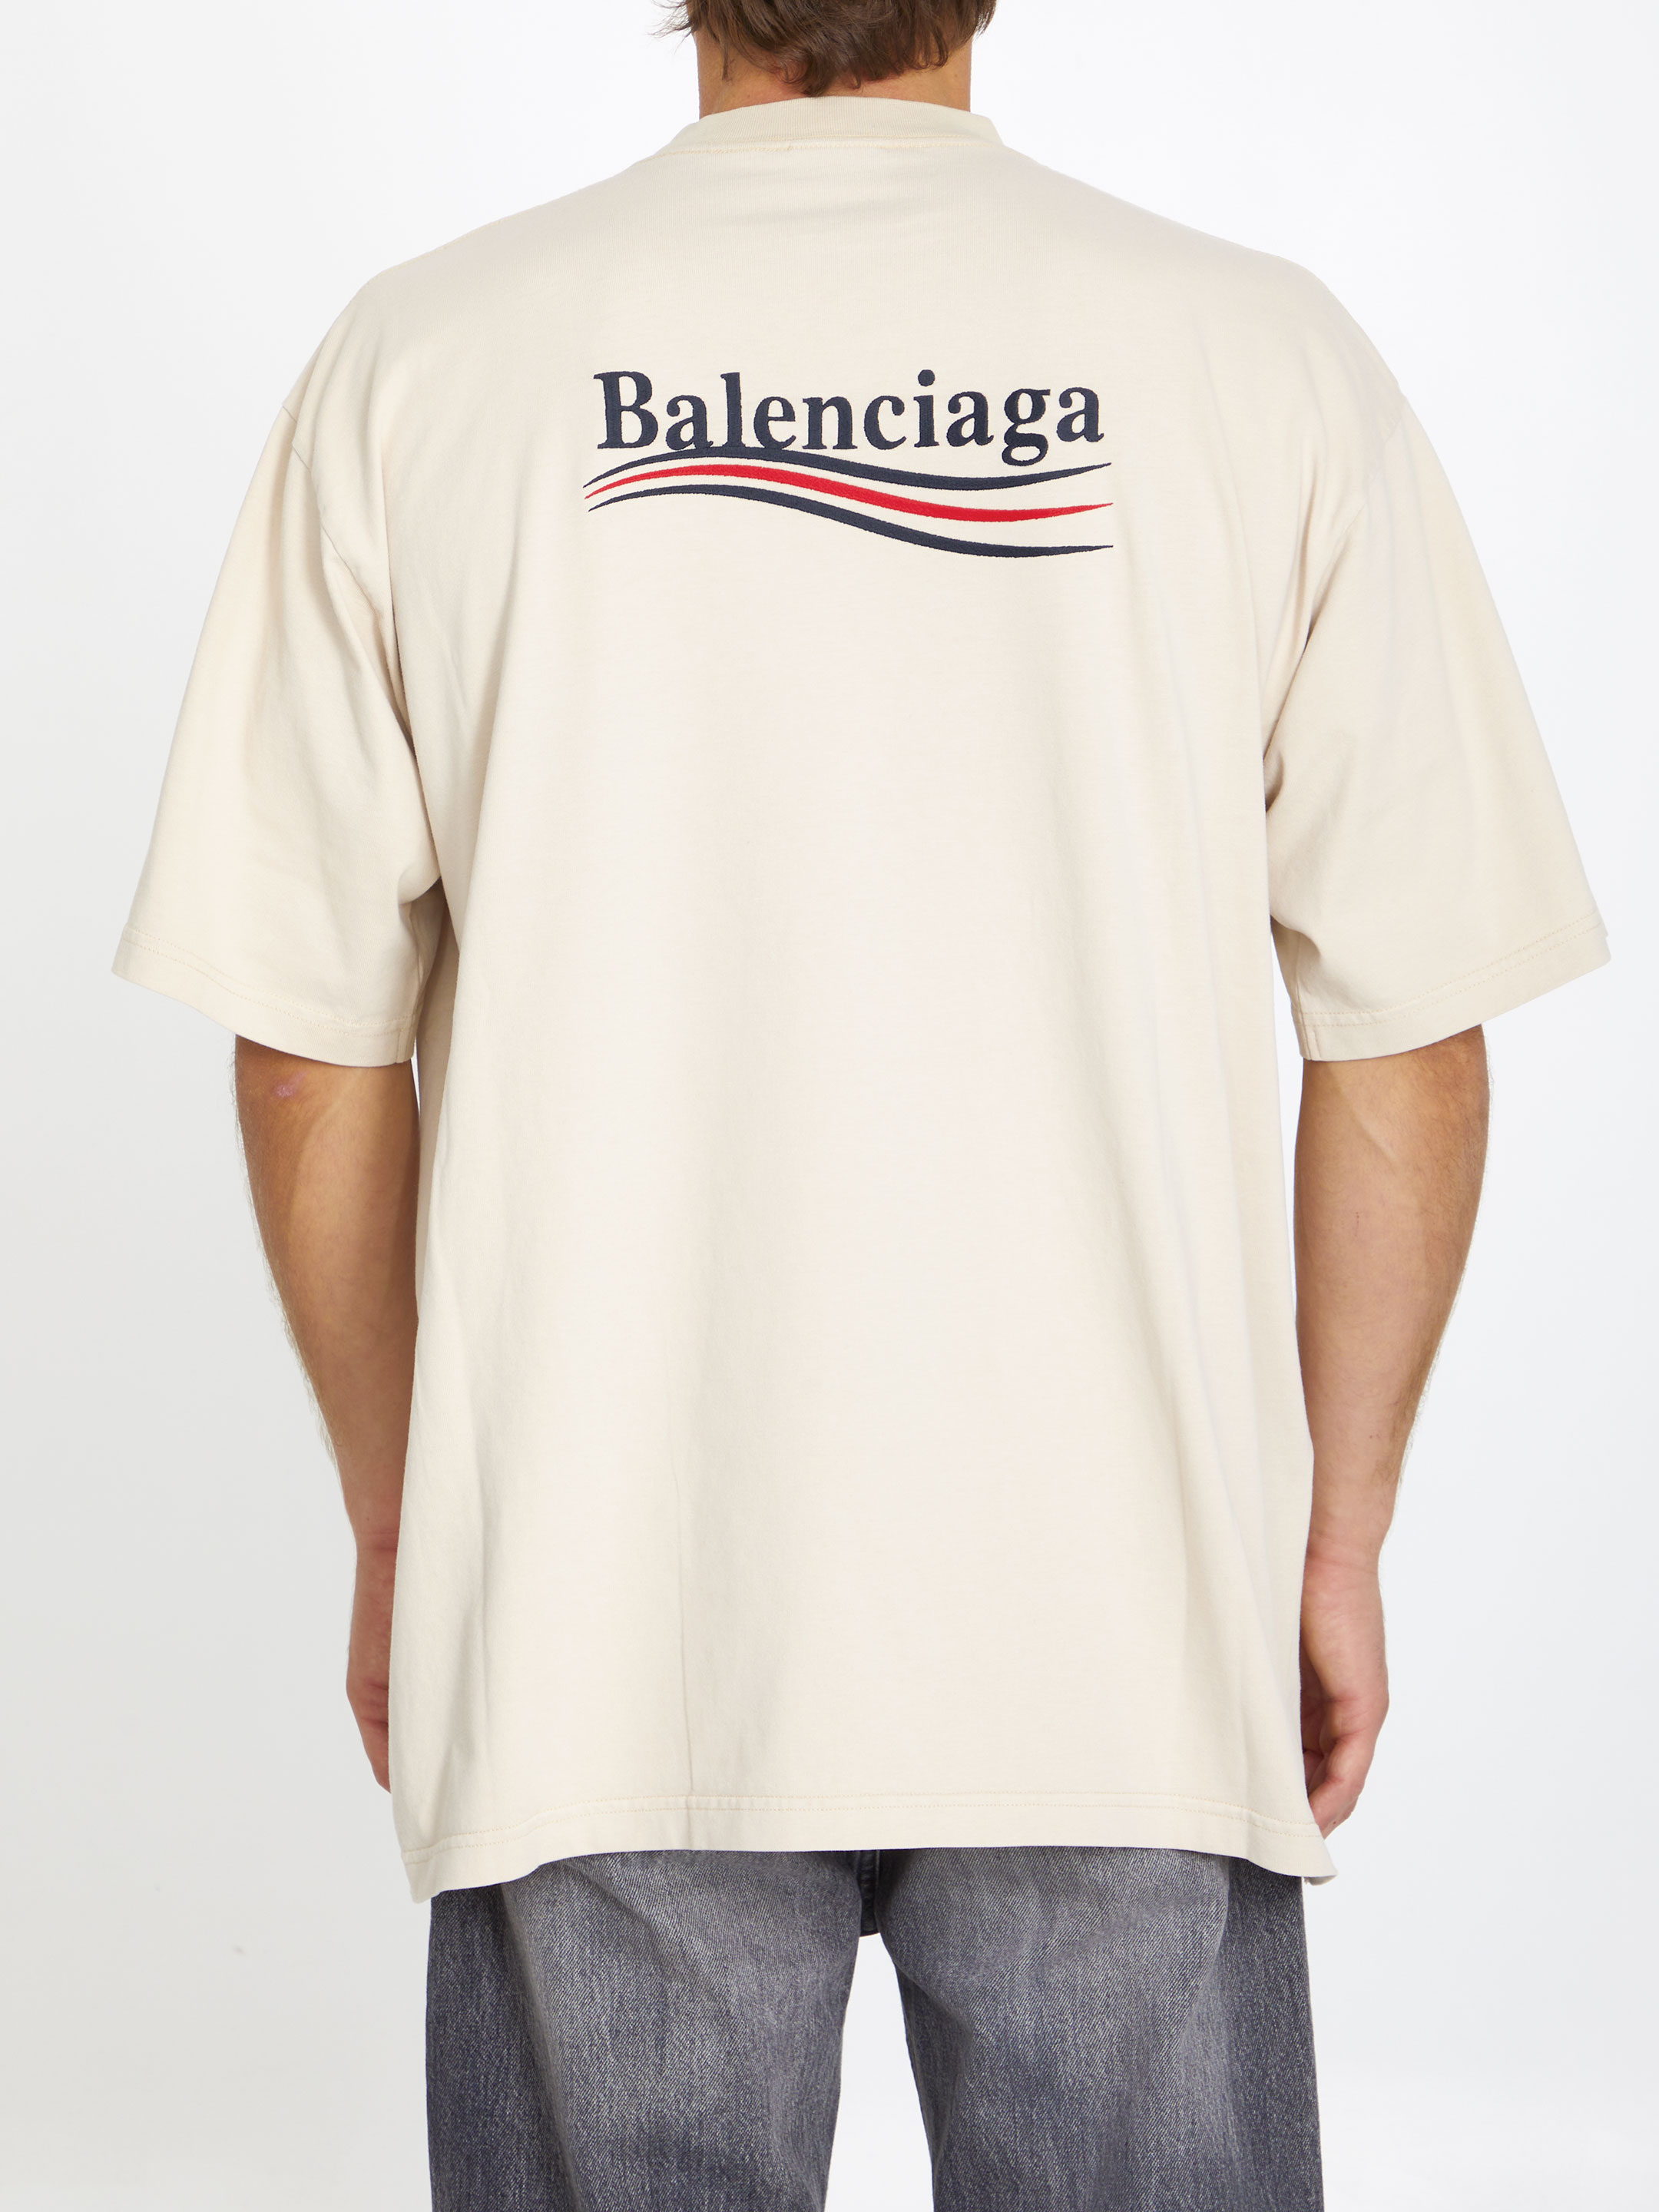 BALENCIAGA - Political Campaign t-shirt | Leam Roma - Luxury 